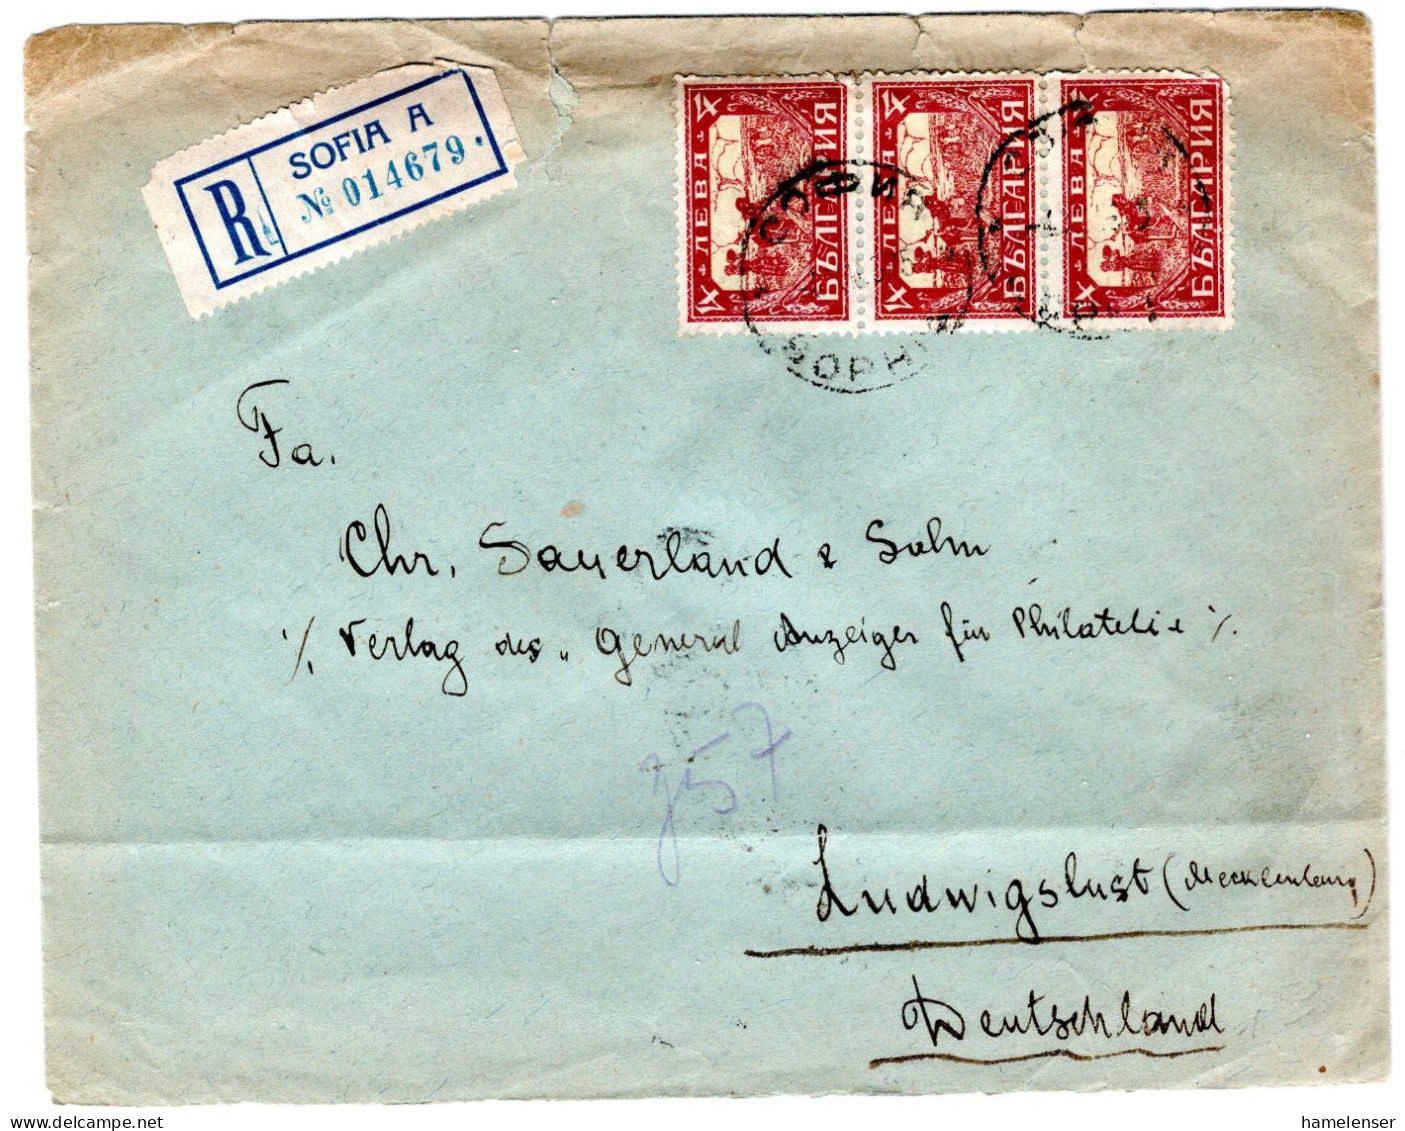 L64883 - Bulgarien - 1925 - 3@4L Landwirtschaft A R-Bf SOFIA -> LUDWIGSLUST (Deutschland), Kl Mgl - Brieven En Documenten